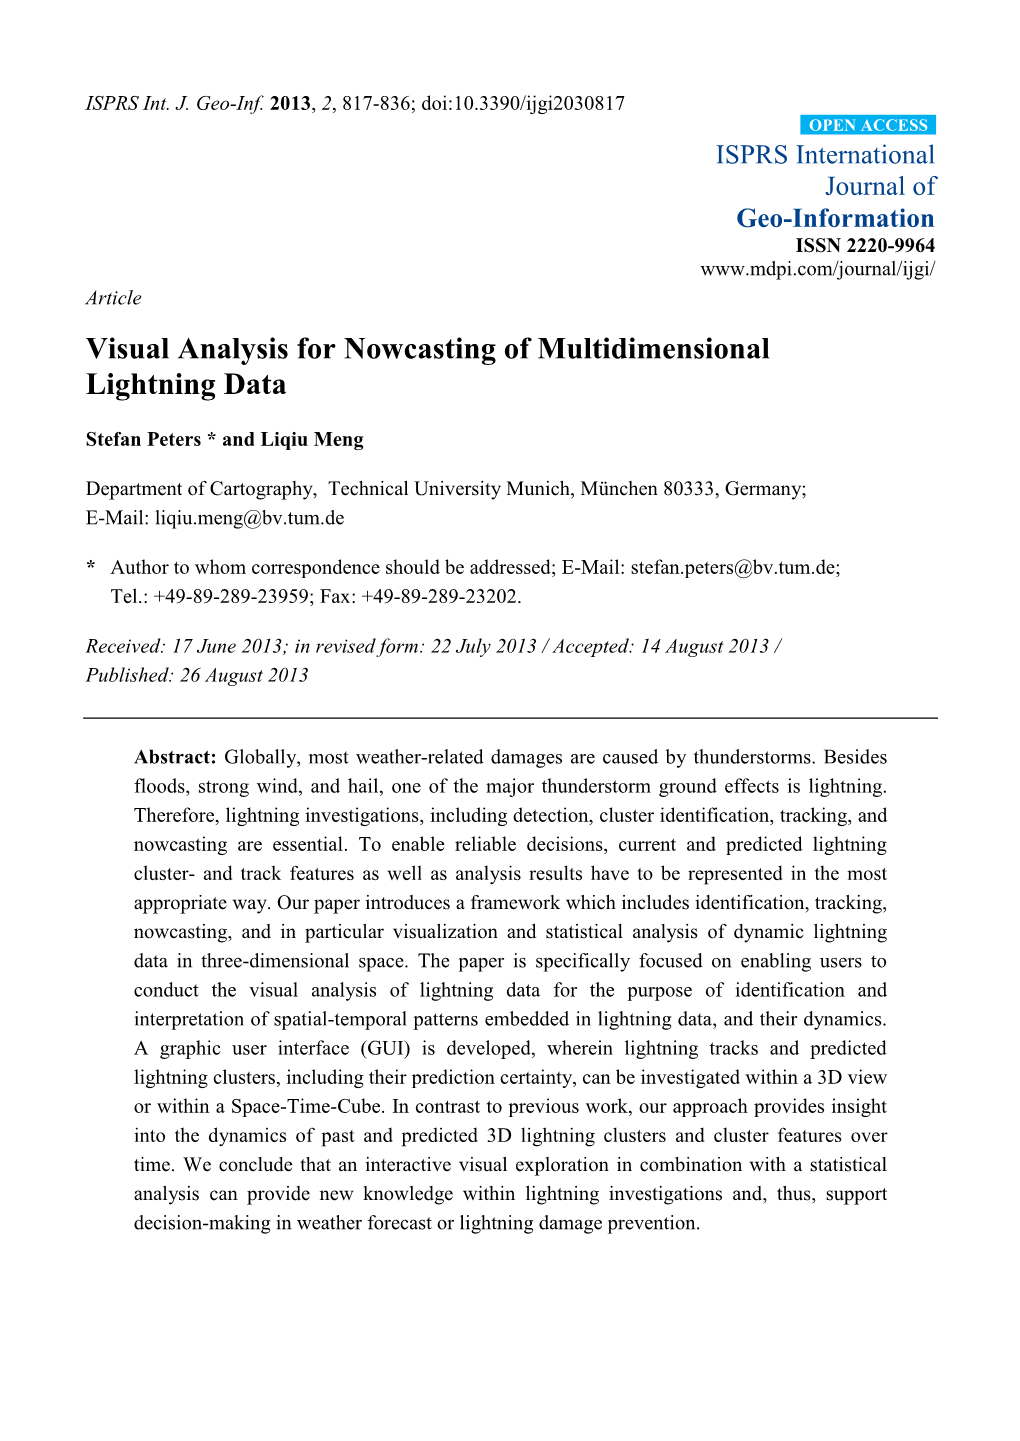 Visual Analysis for Nowcasting of Multidimensional Lightning Data